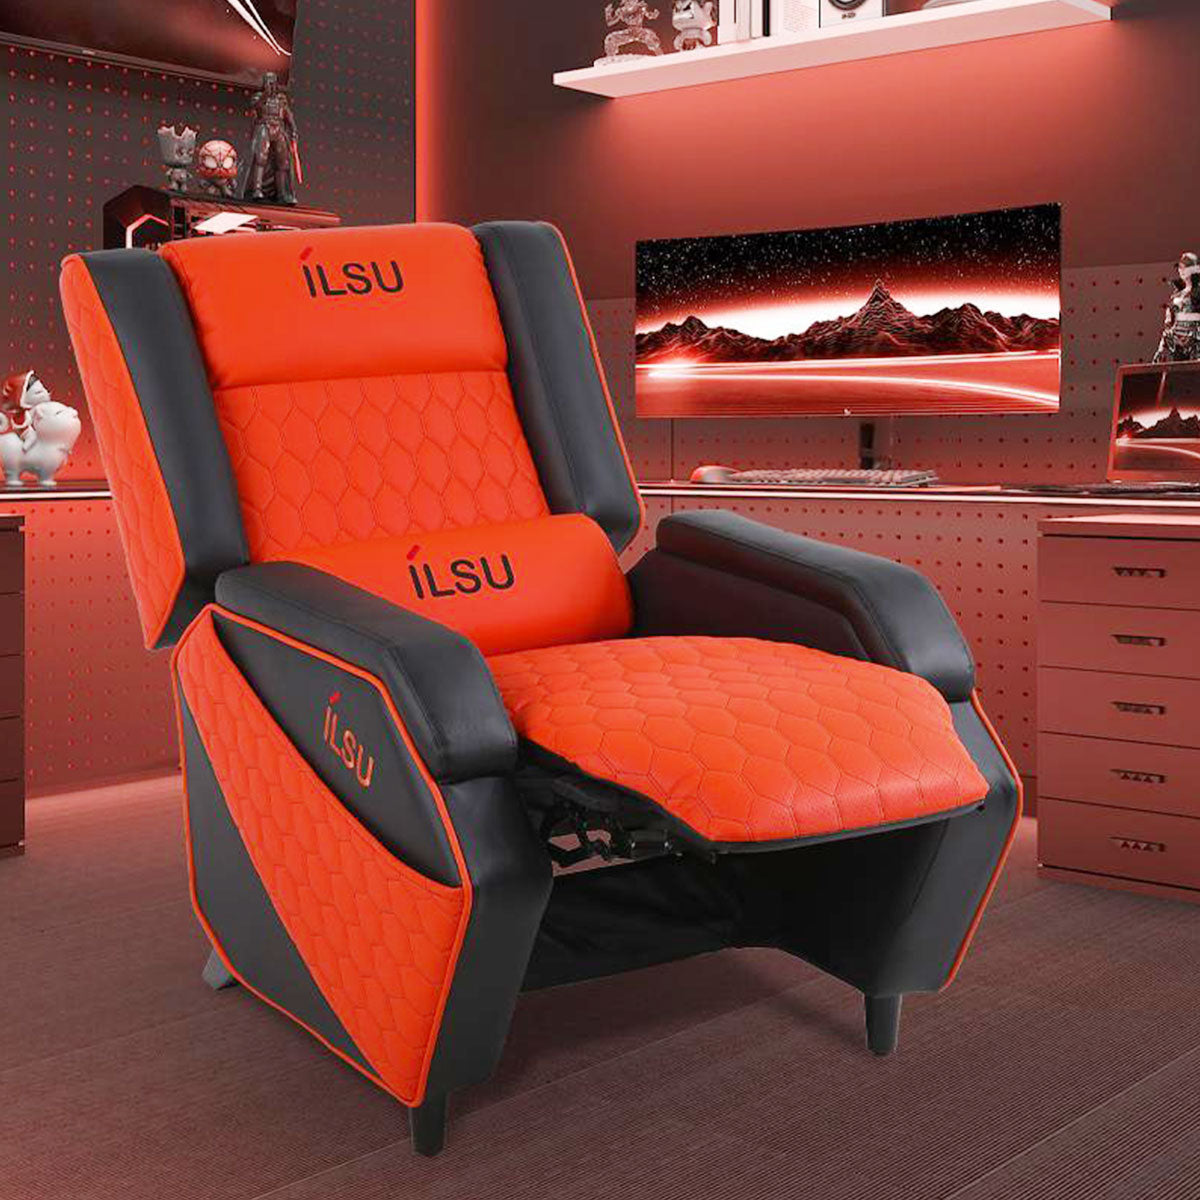 ILSU Knight كرسي أريكة كرسي للألعاب - أسود، أحمر